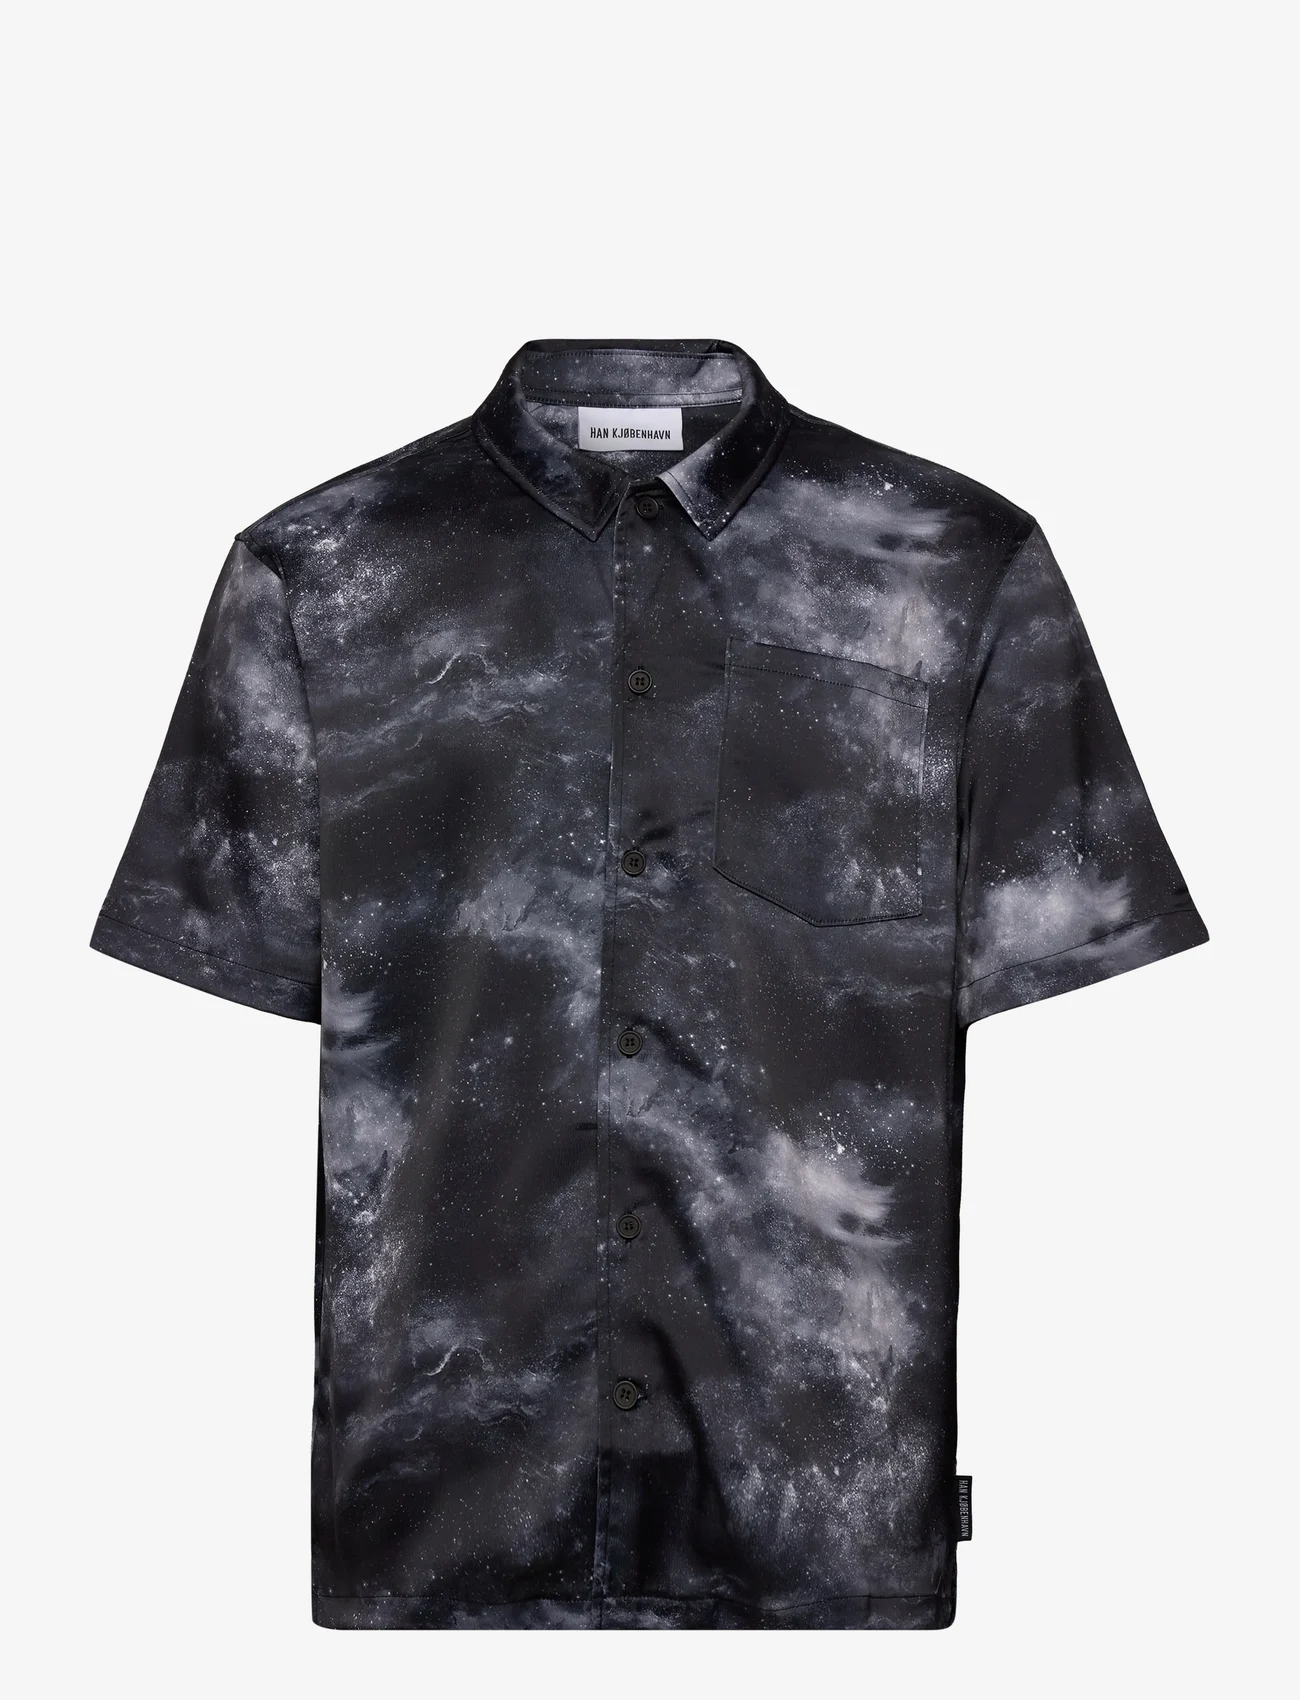 HAN Kjøbenhavn - Printed Summer Shirt Short Sleeve - short-sleeved shirts - grey - 0